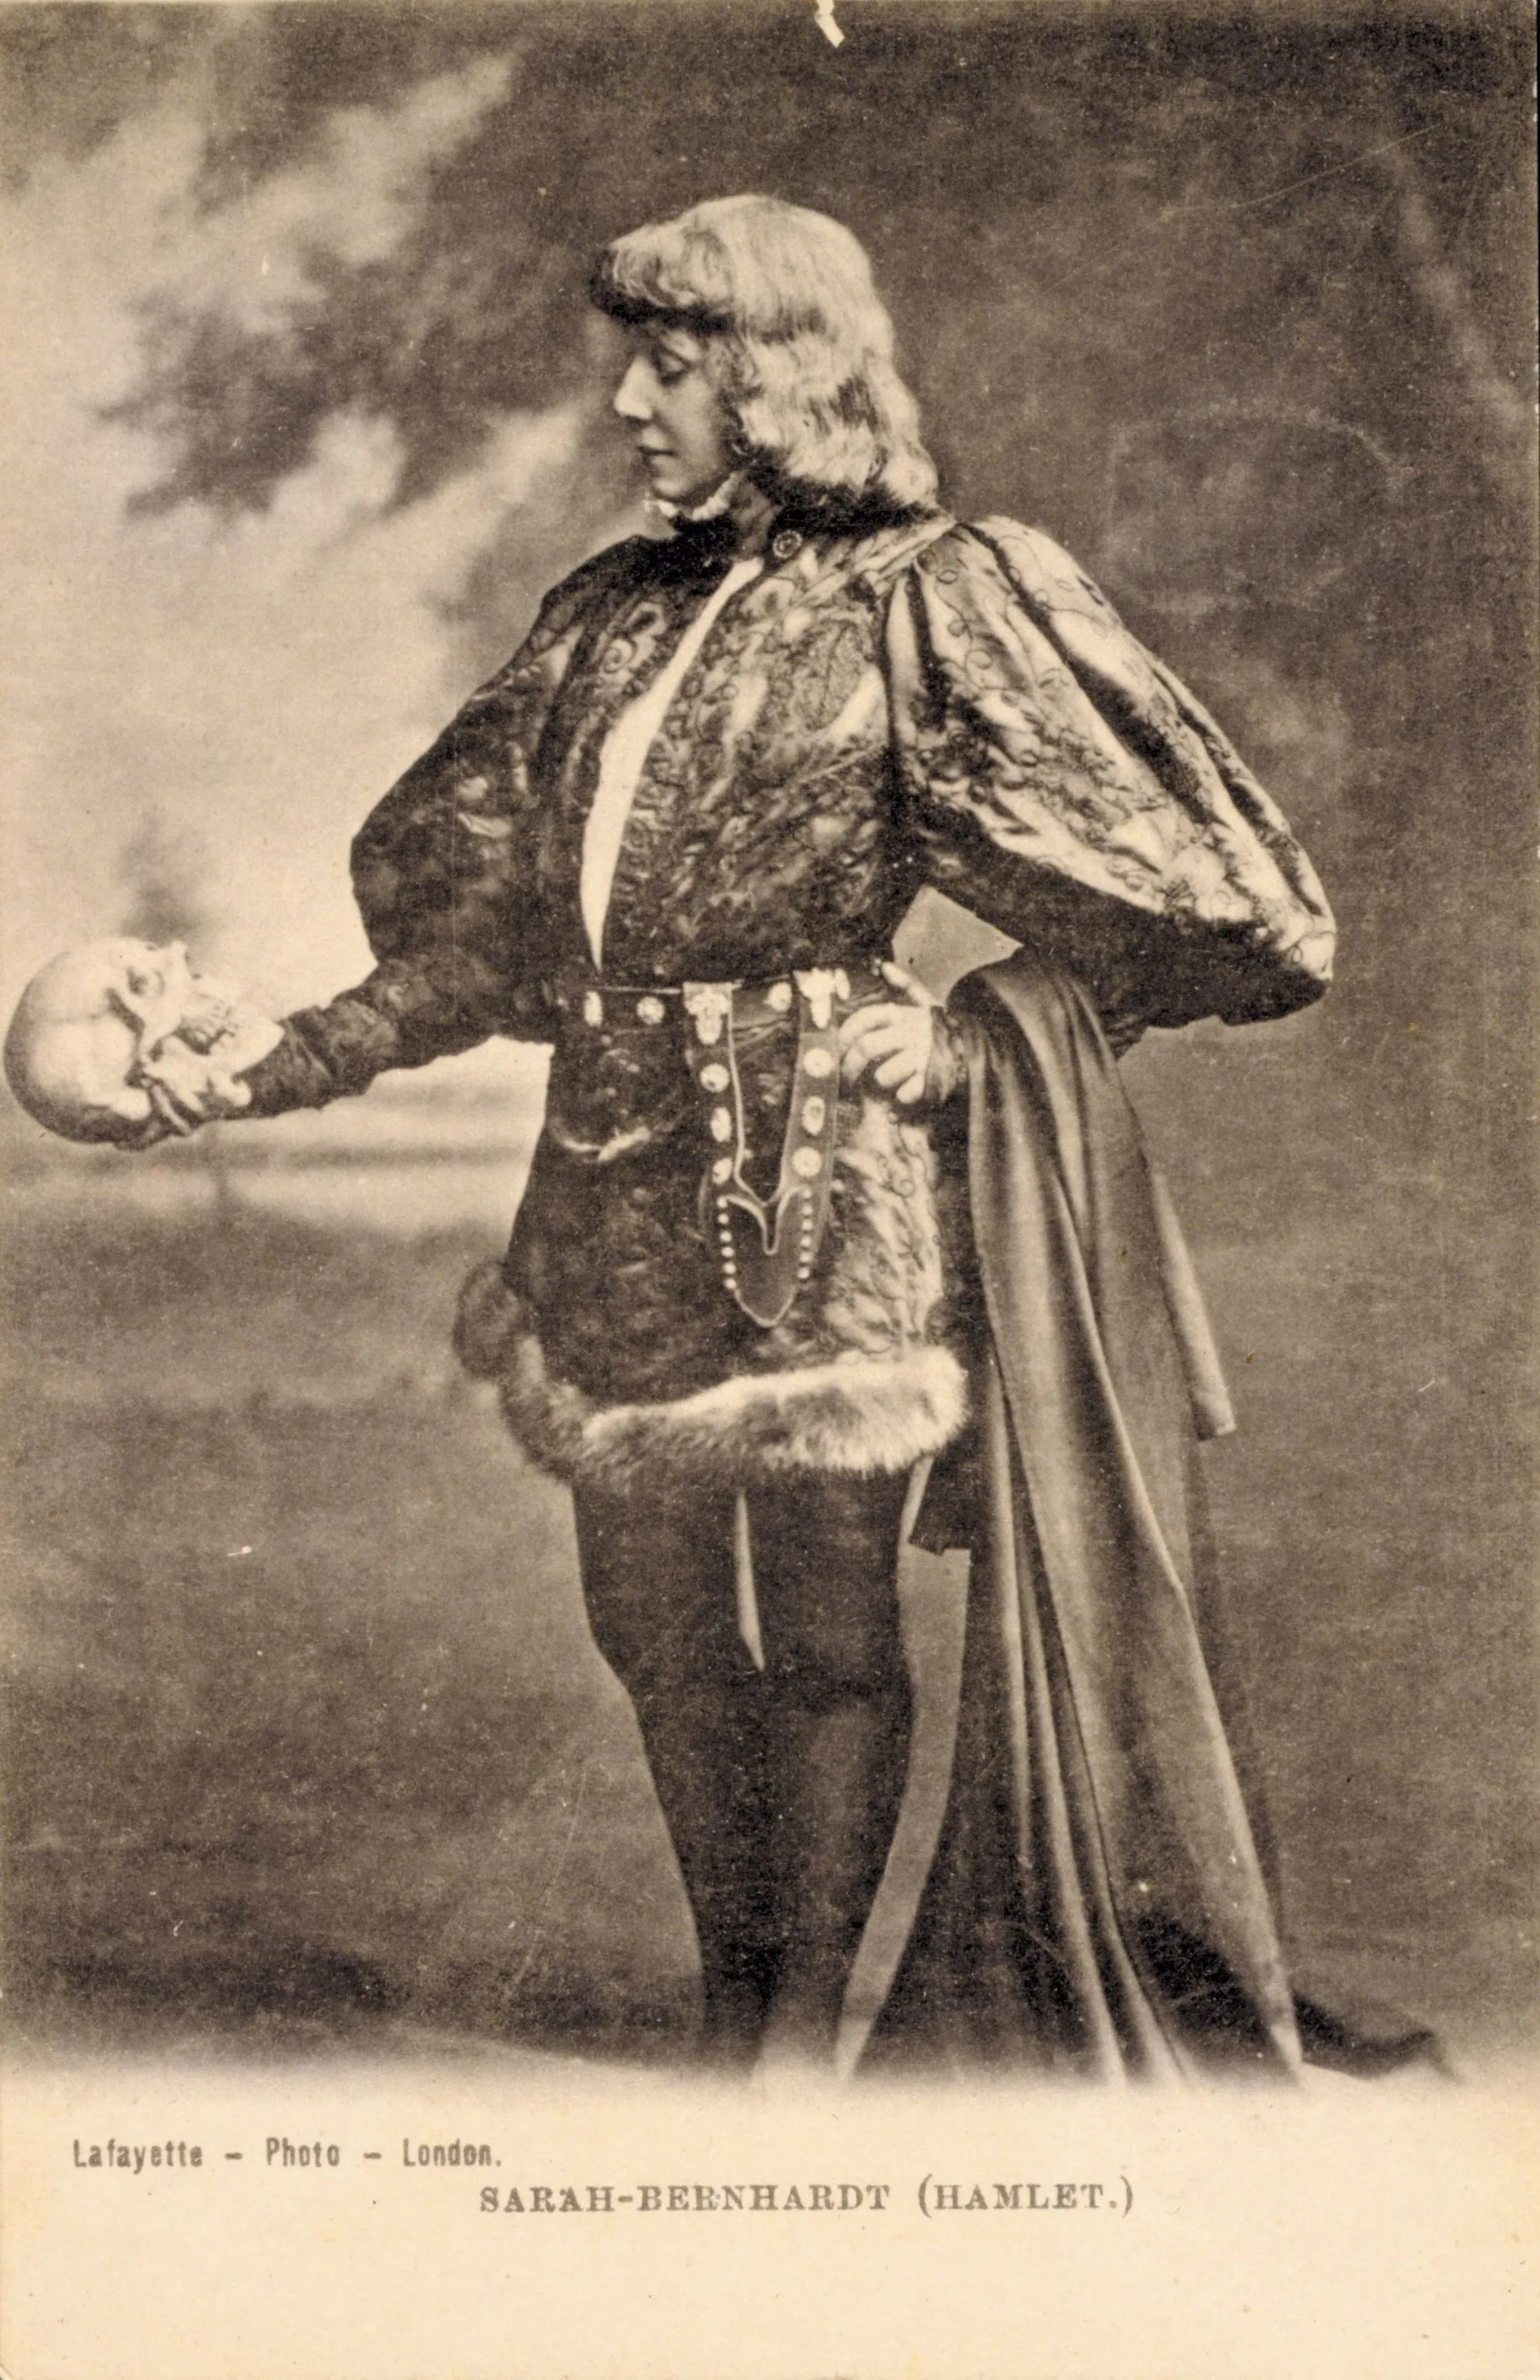  Sarah Bernhardt en Hamlet, 1899, photographie.